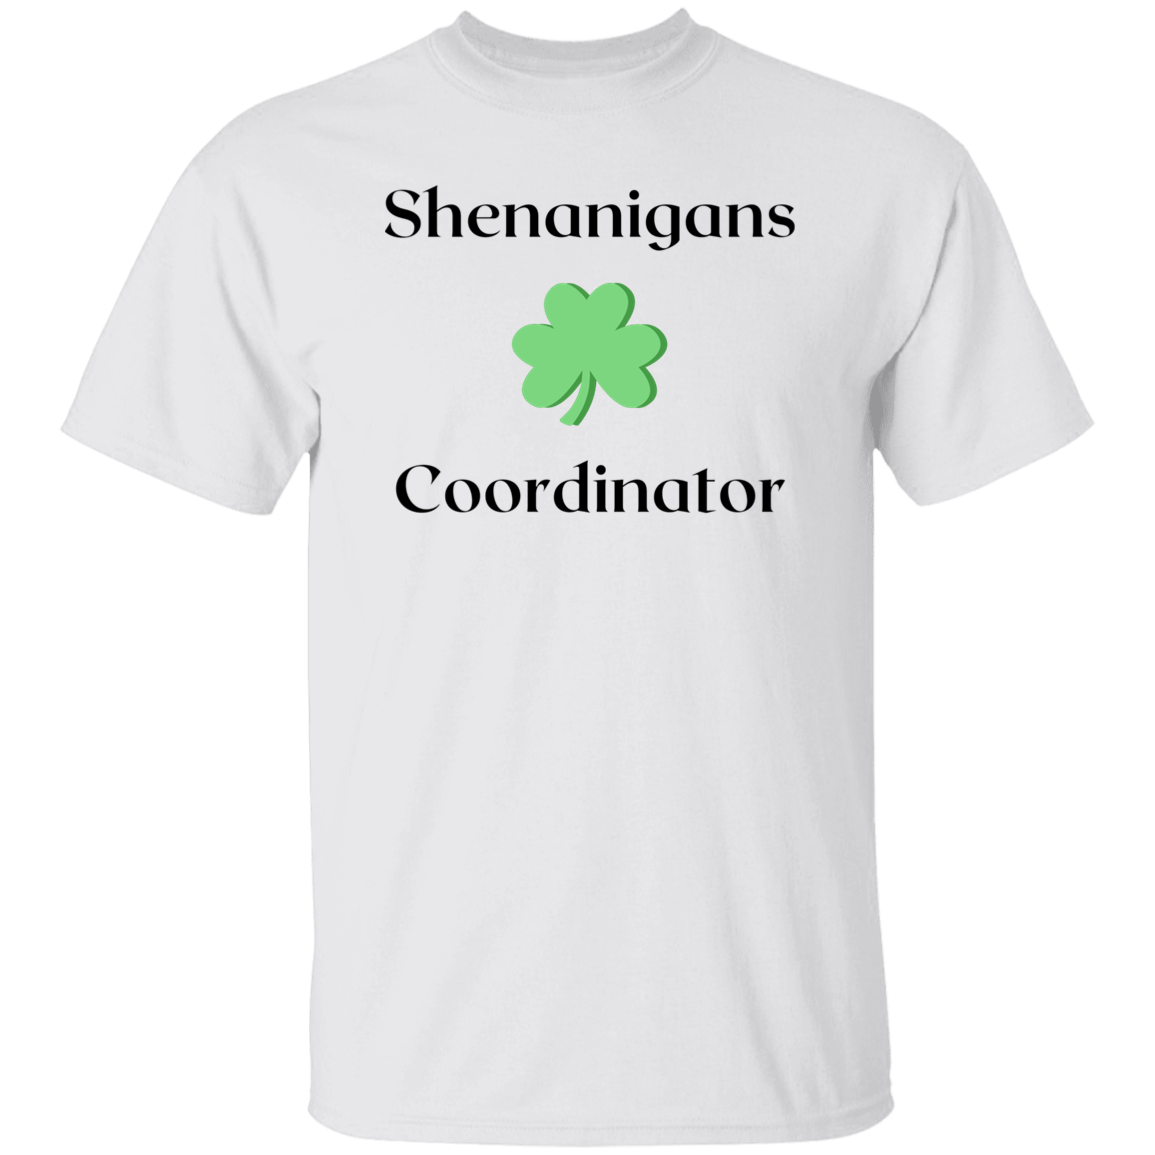 Shenanigans Coordinator T-Shirt